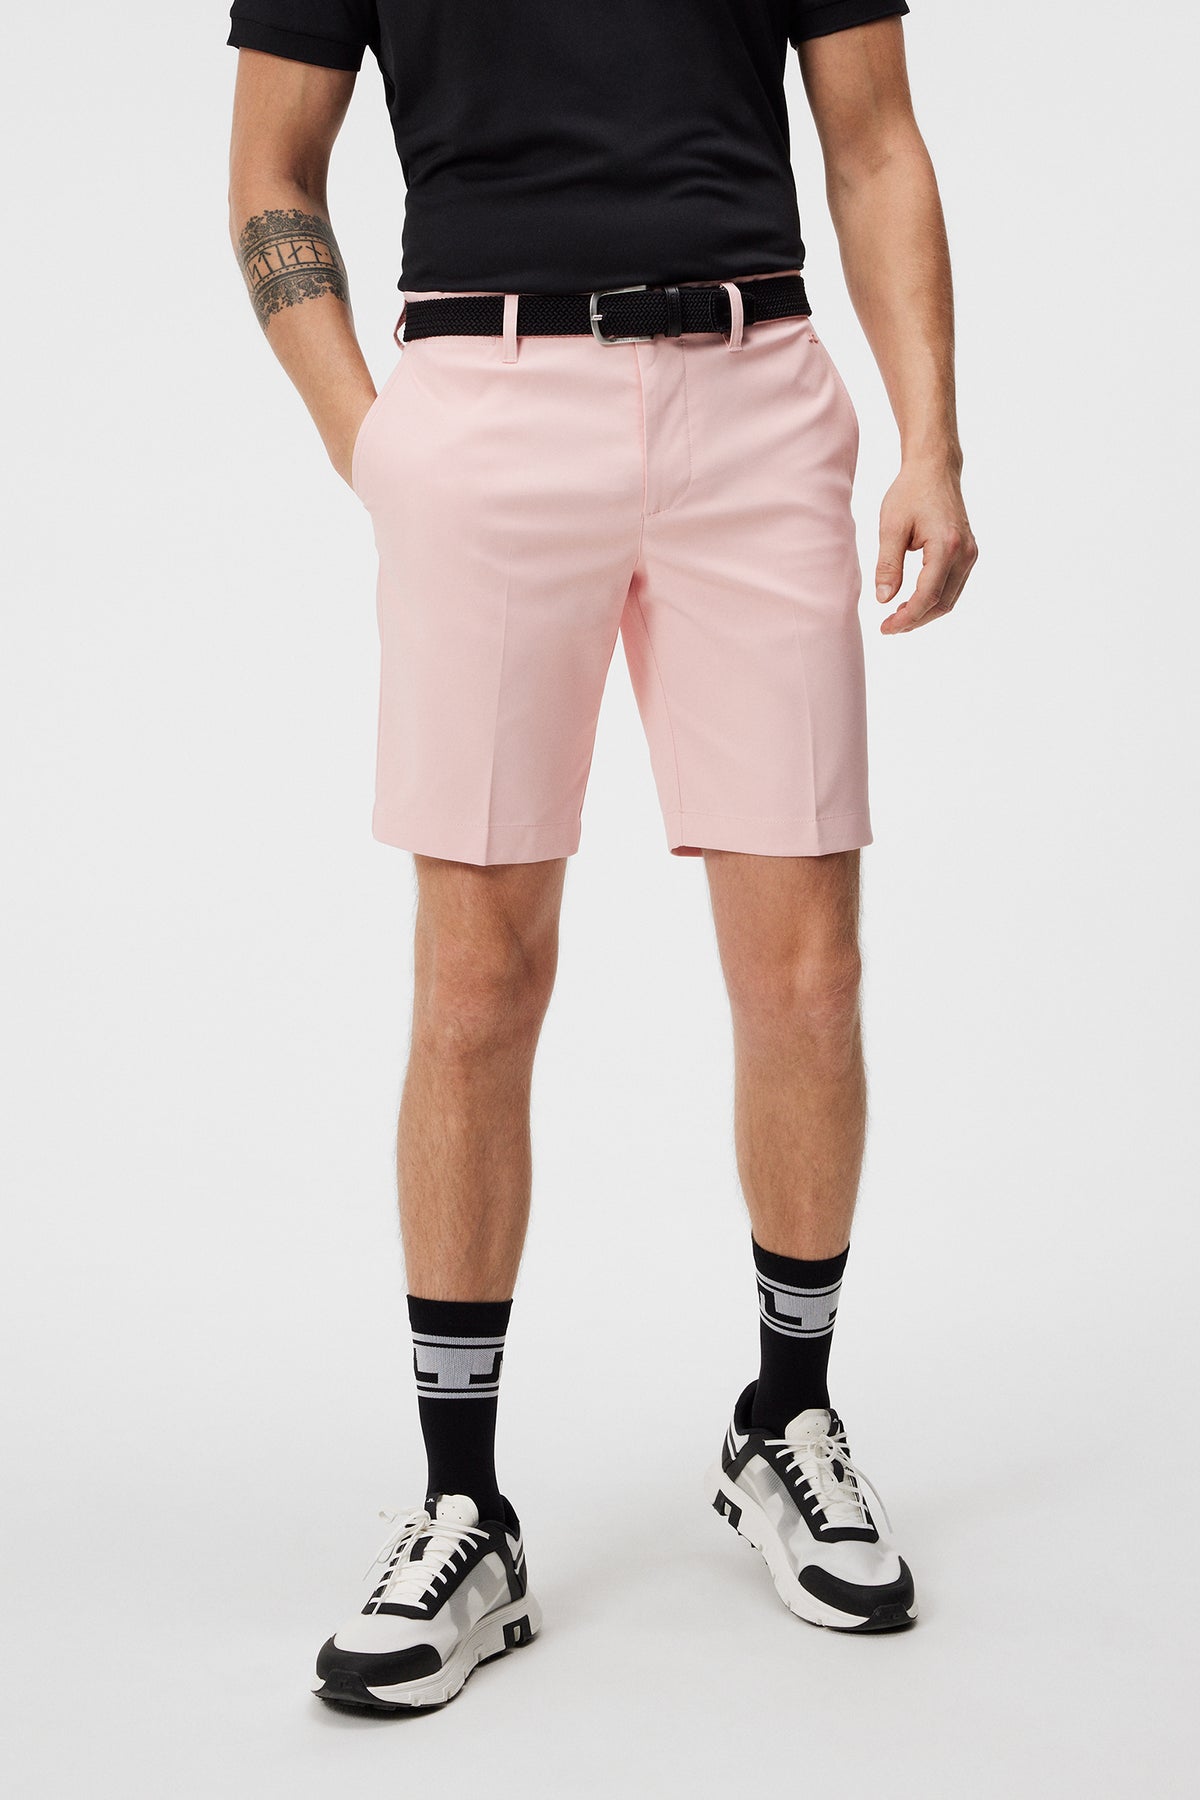 Eloy Shorts / Powder Pink